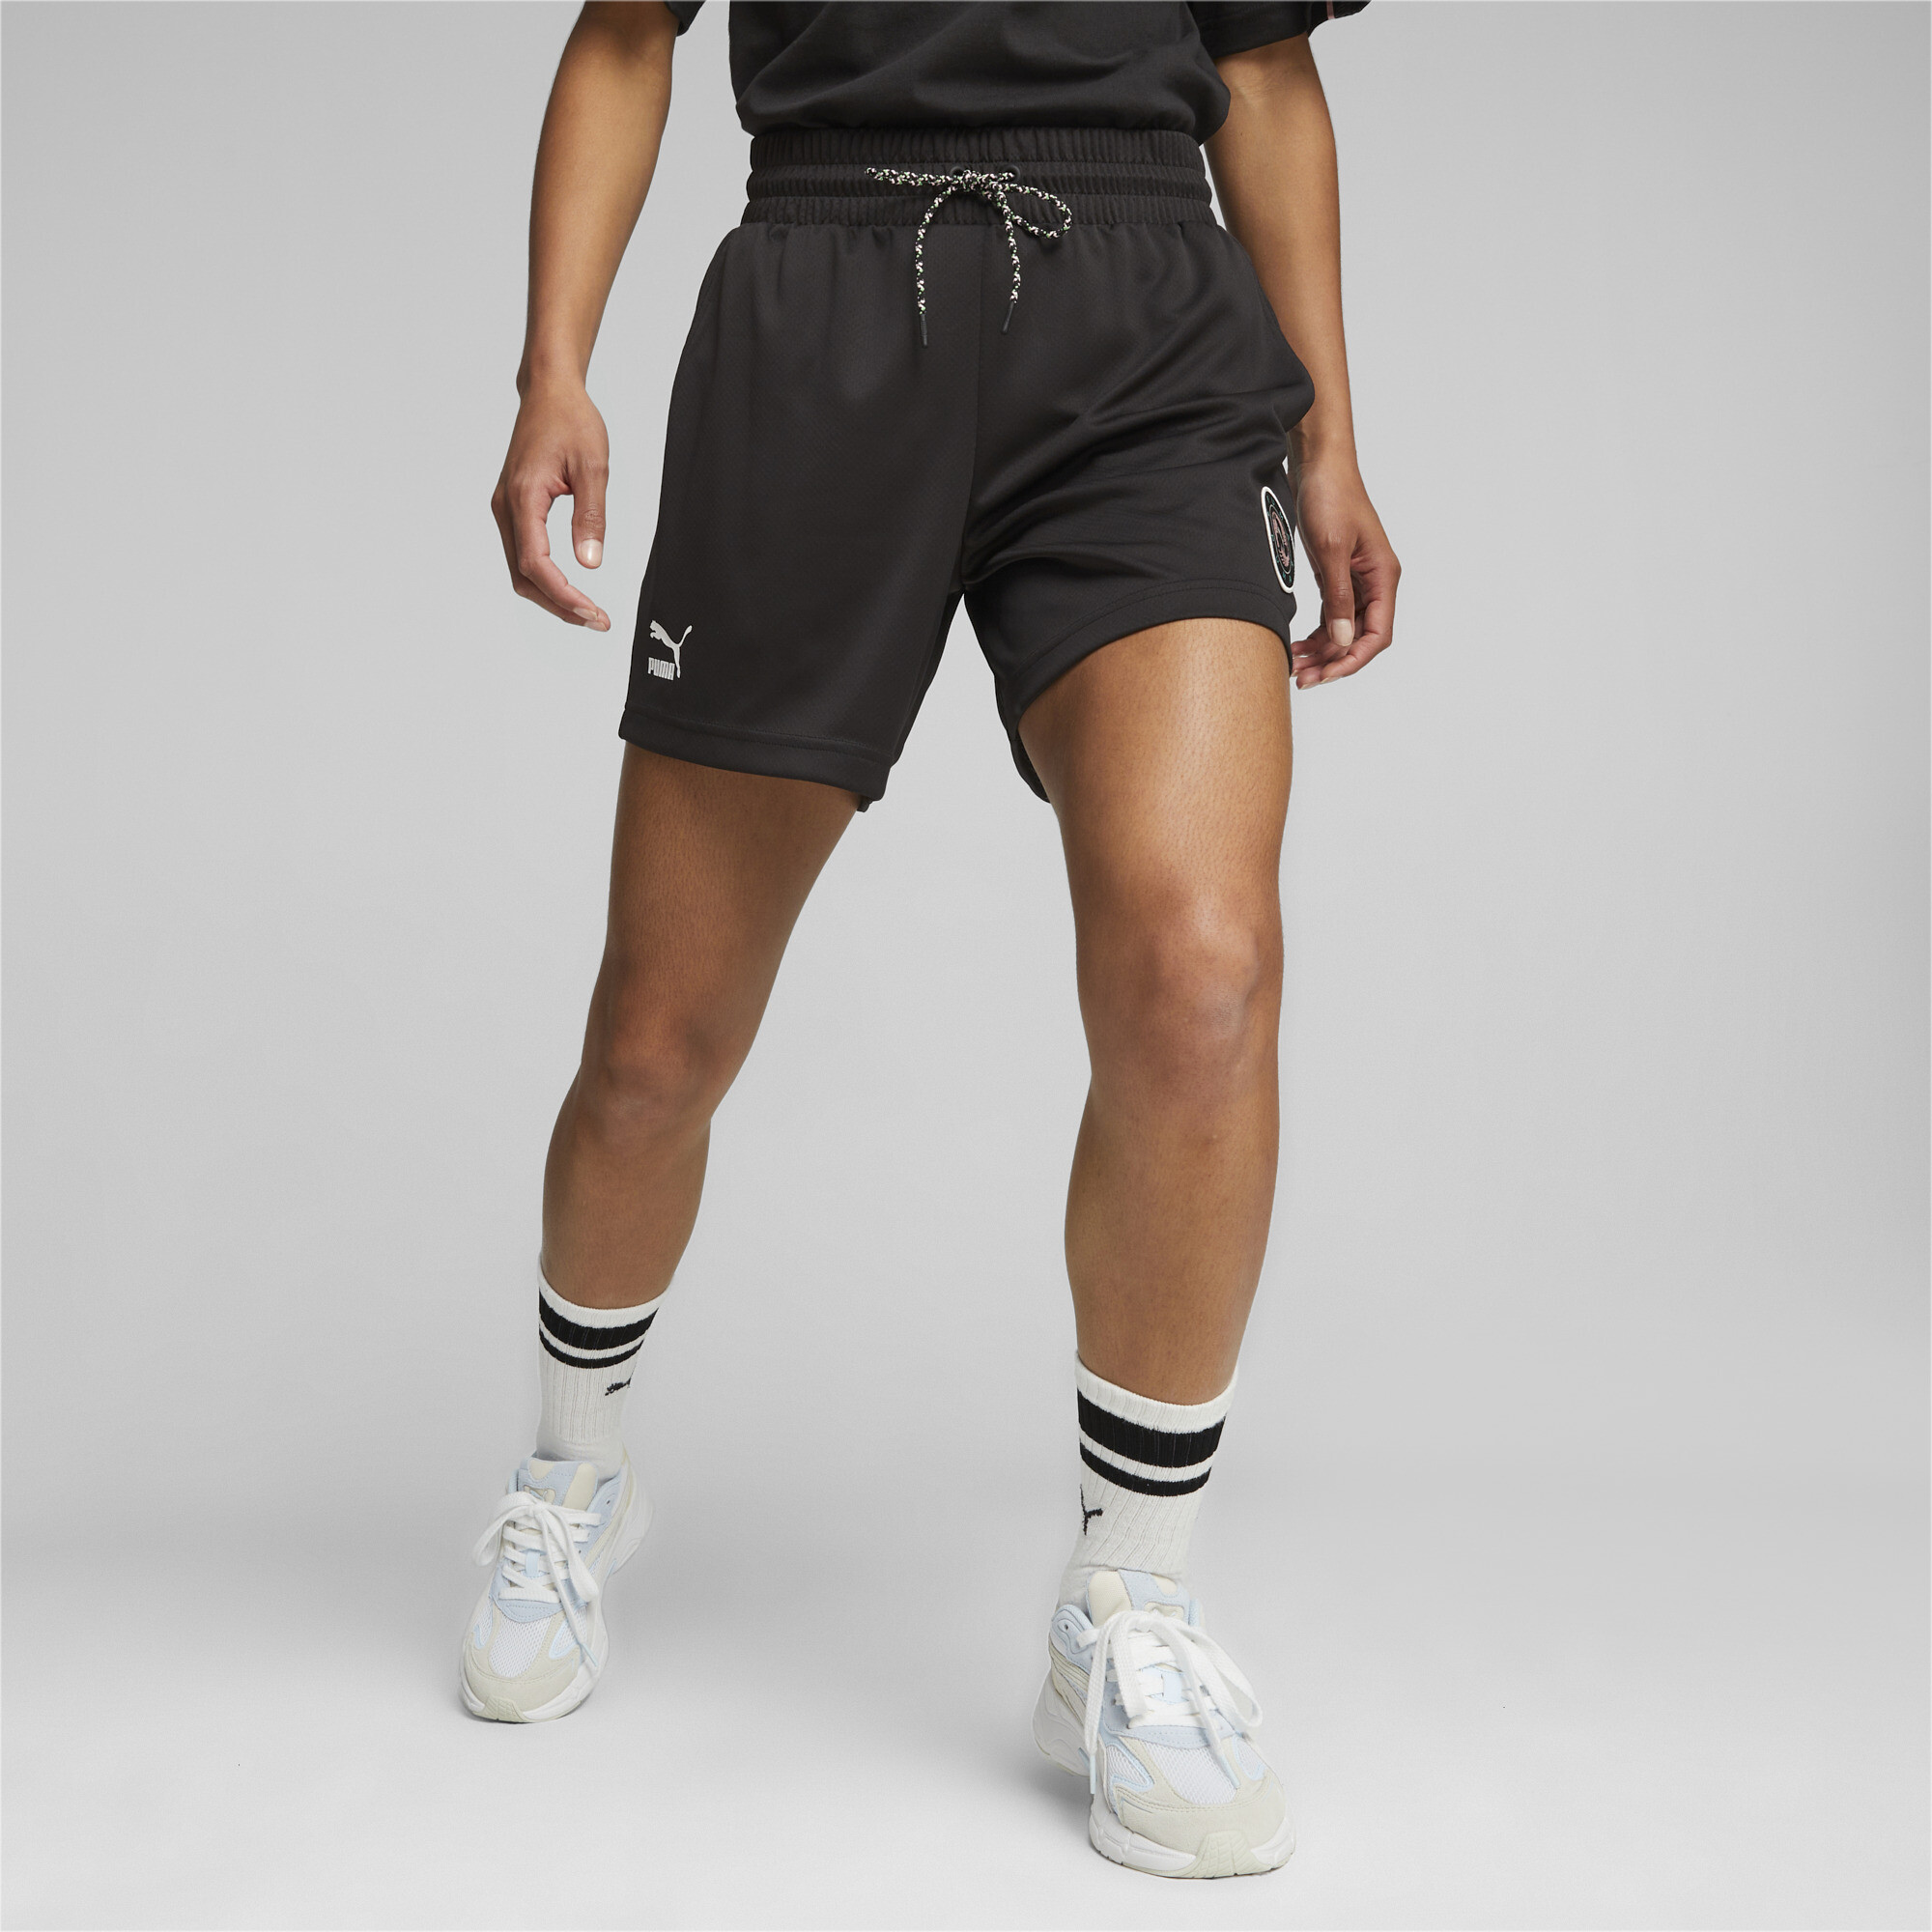 Women's PUMA Dare To Football Shorts In Black, Size Small